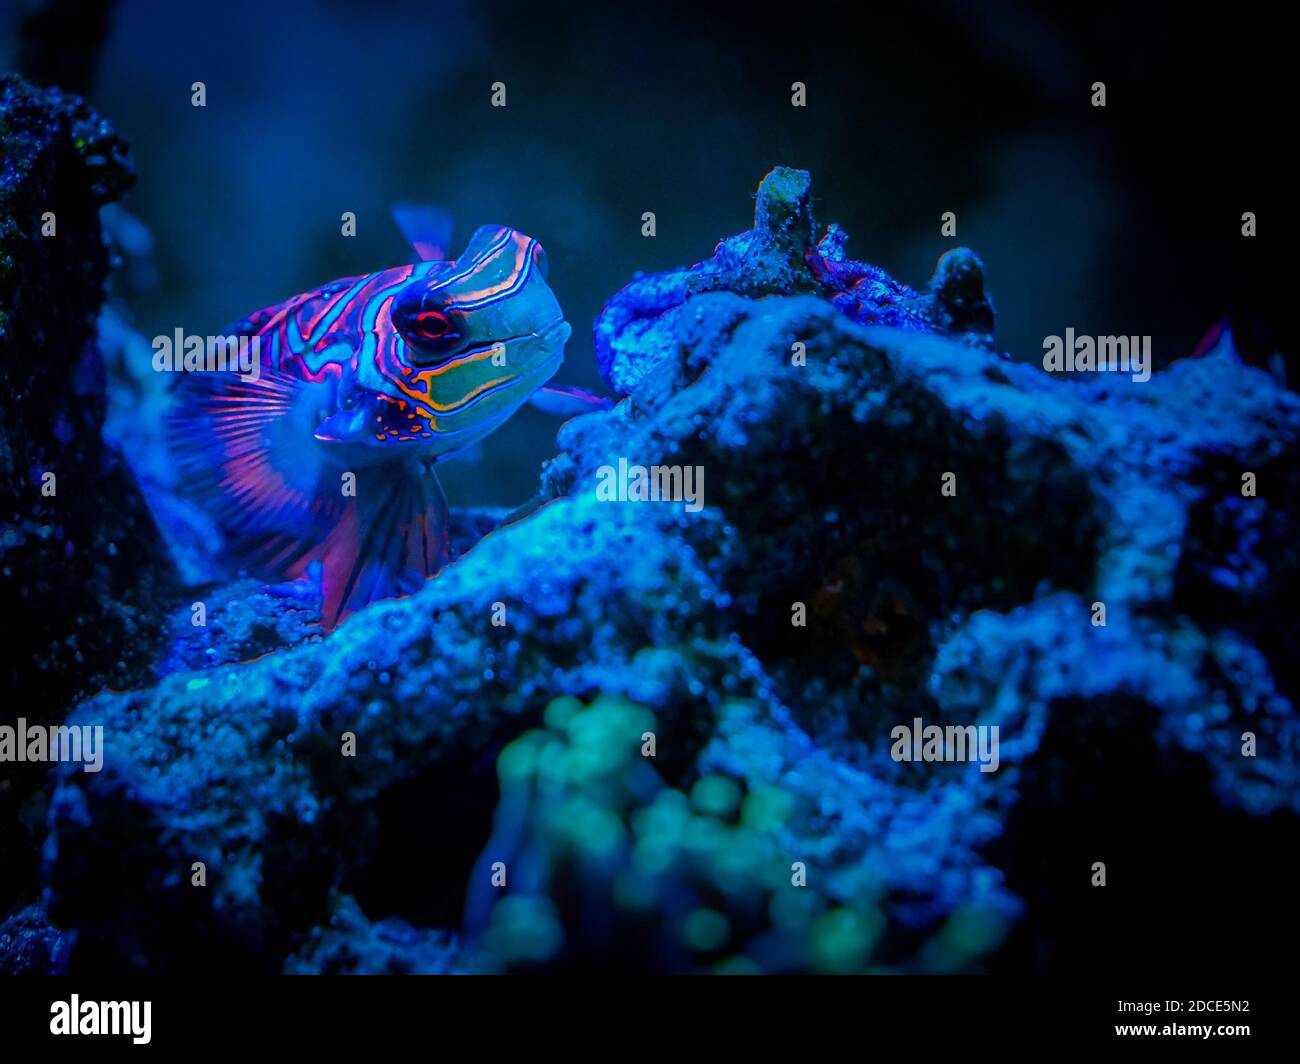 Mandarinfish or Mandarin dragonet (Synchiropus splendidus) on a reef tank with blurred background Stock Photo